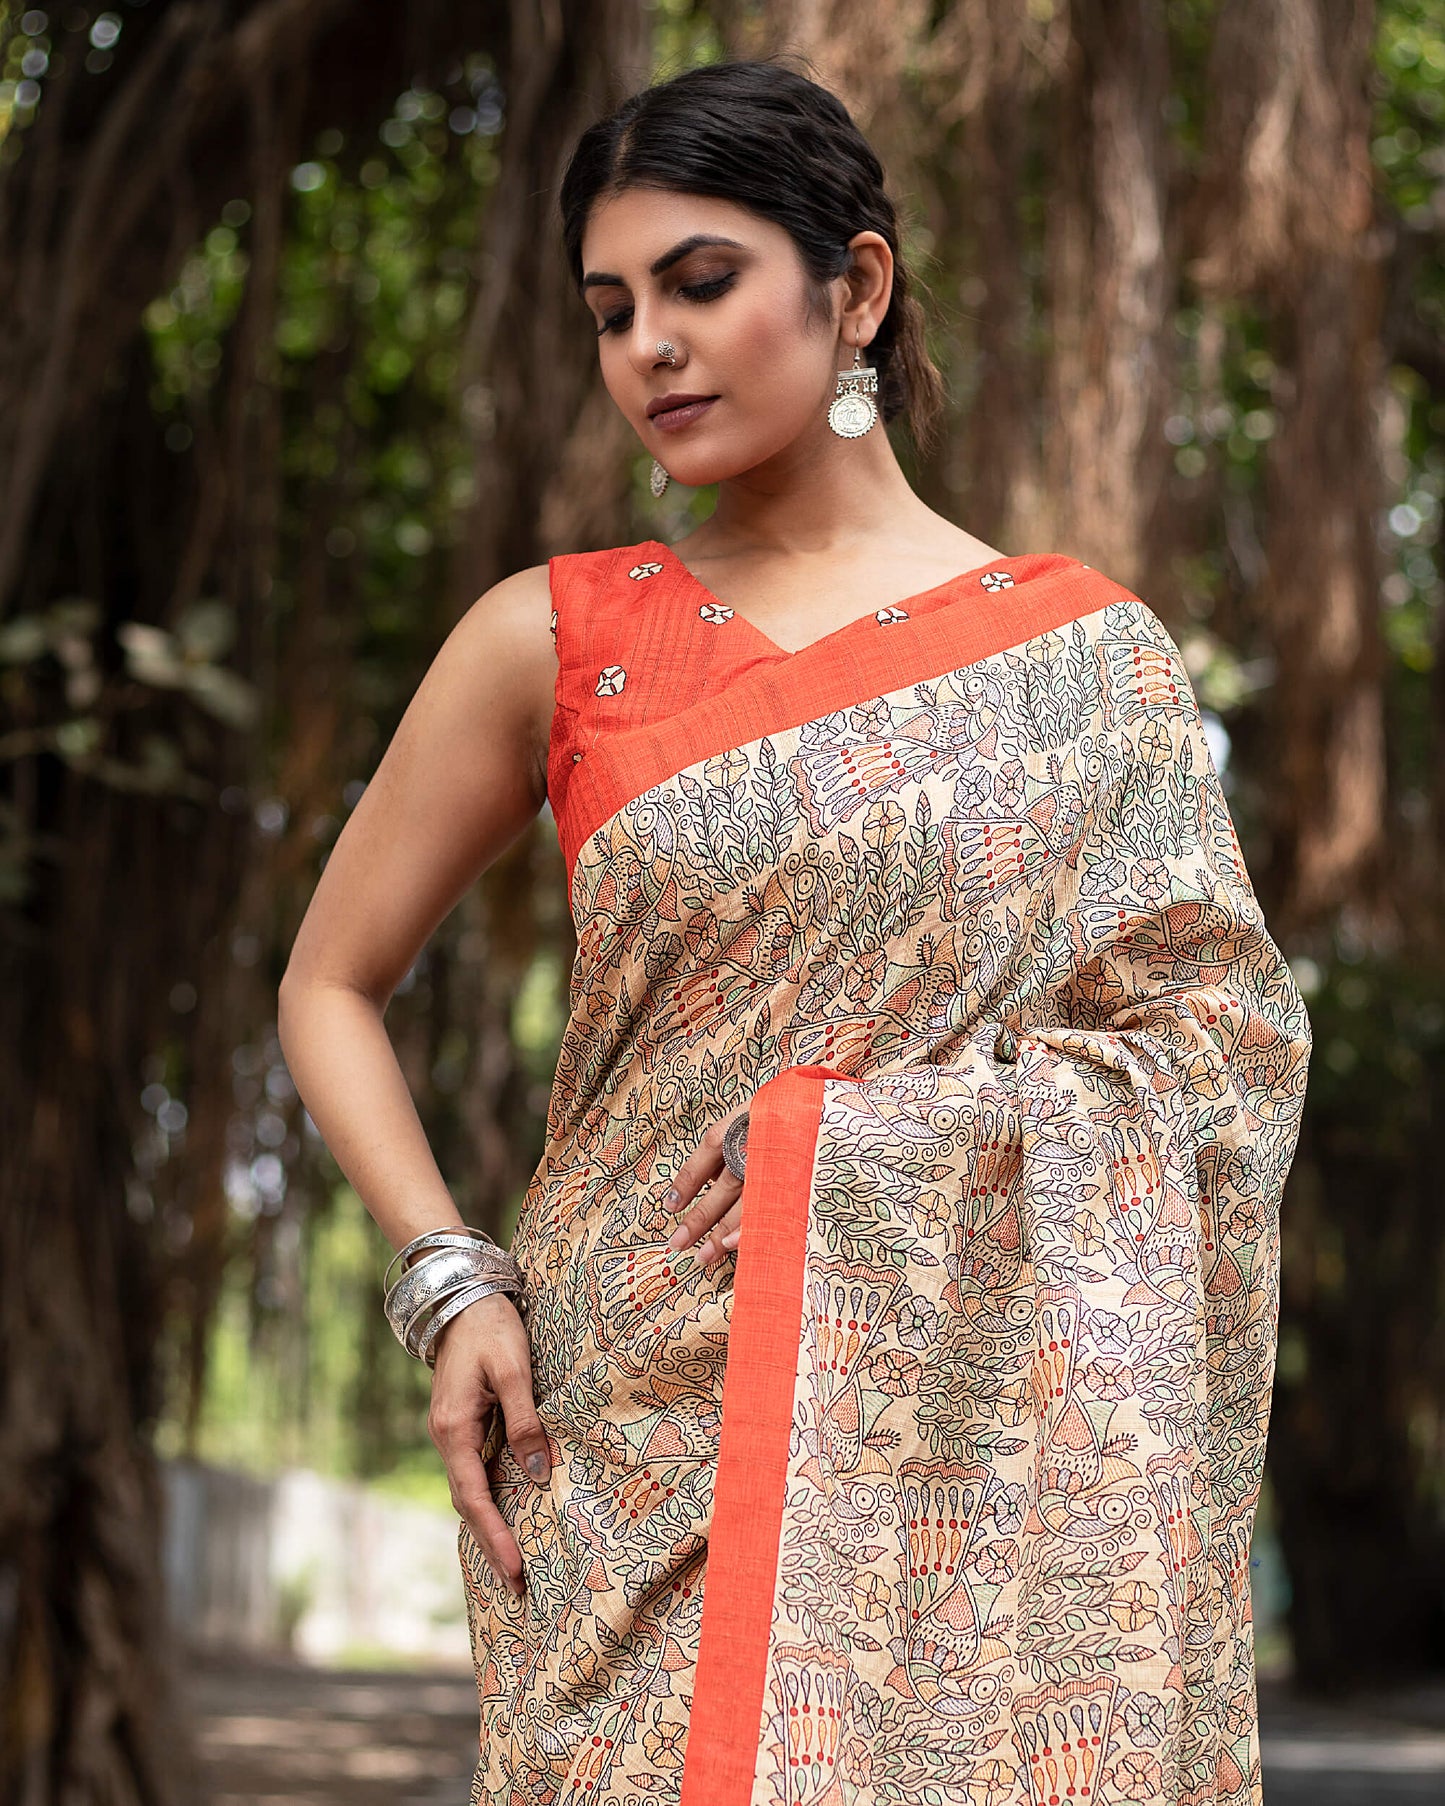 Amber Orange And Oat Beige Madhubani Pattern Digital Print Heritage Art Silk Saree With Tassels